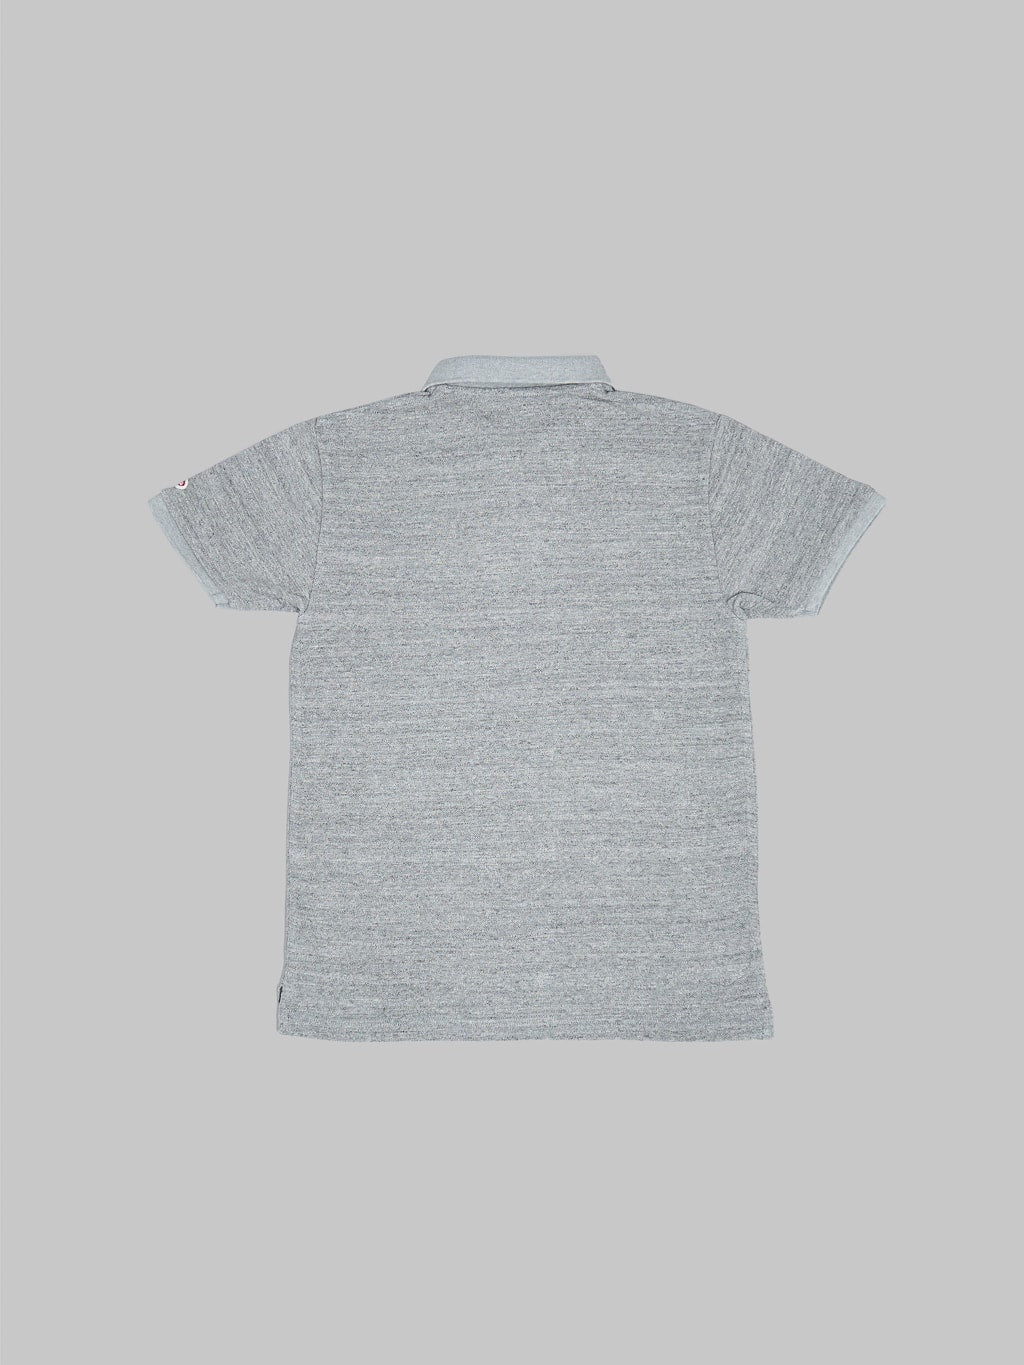 UES Polo Shirt Grey